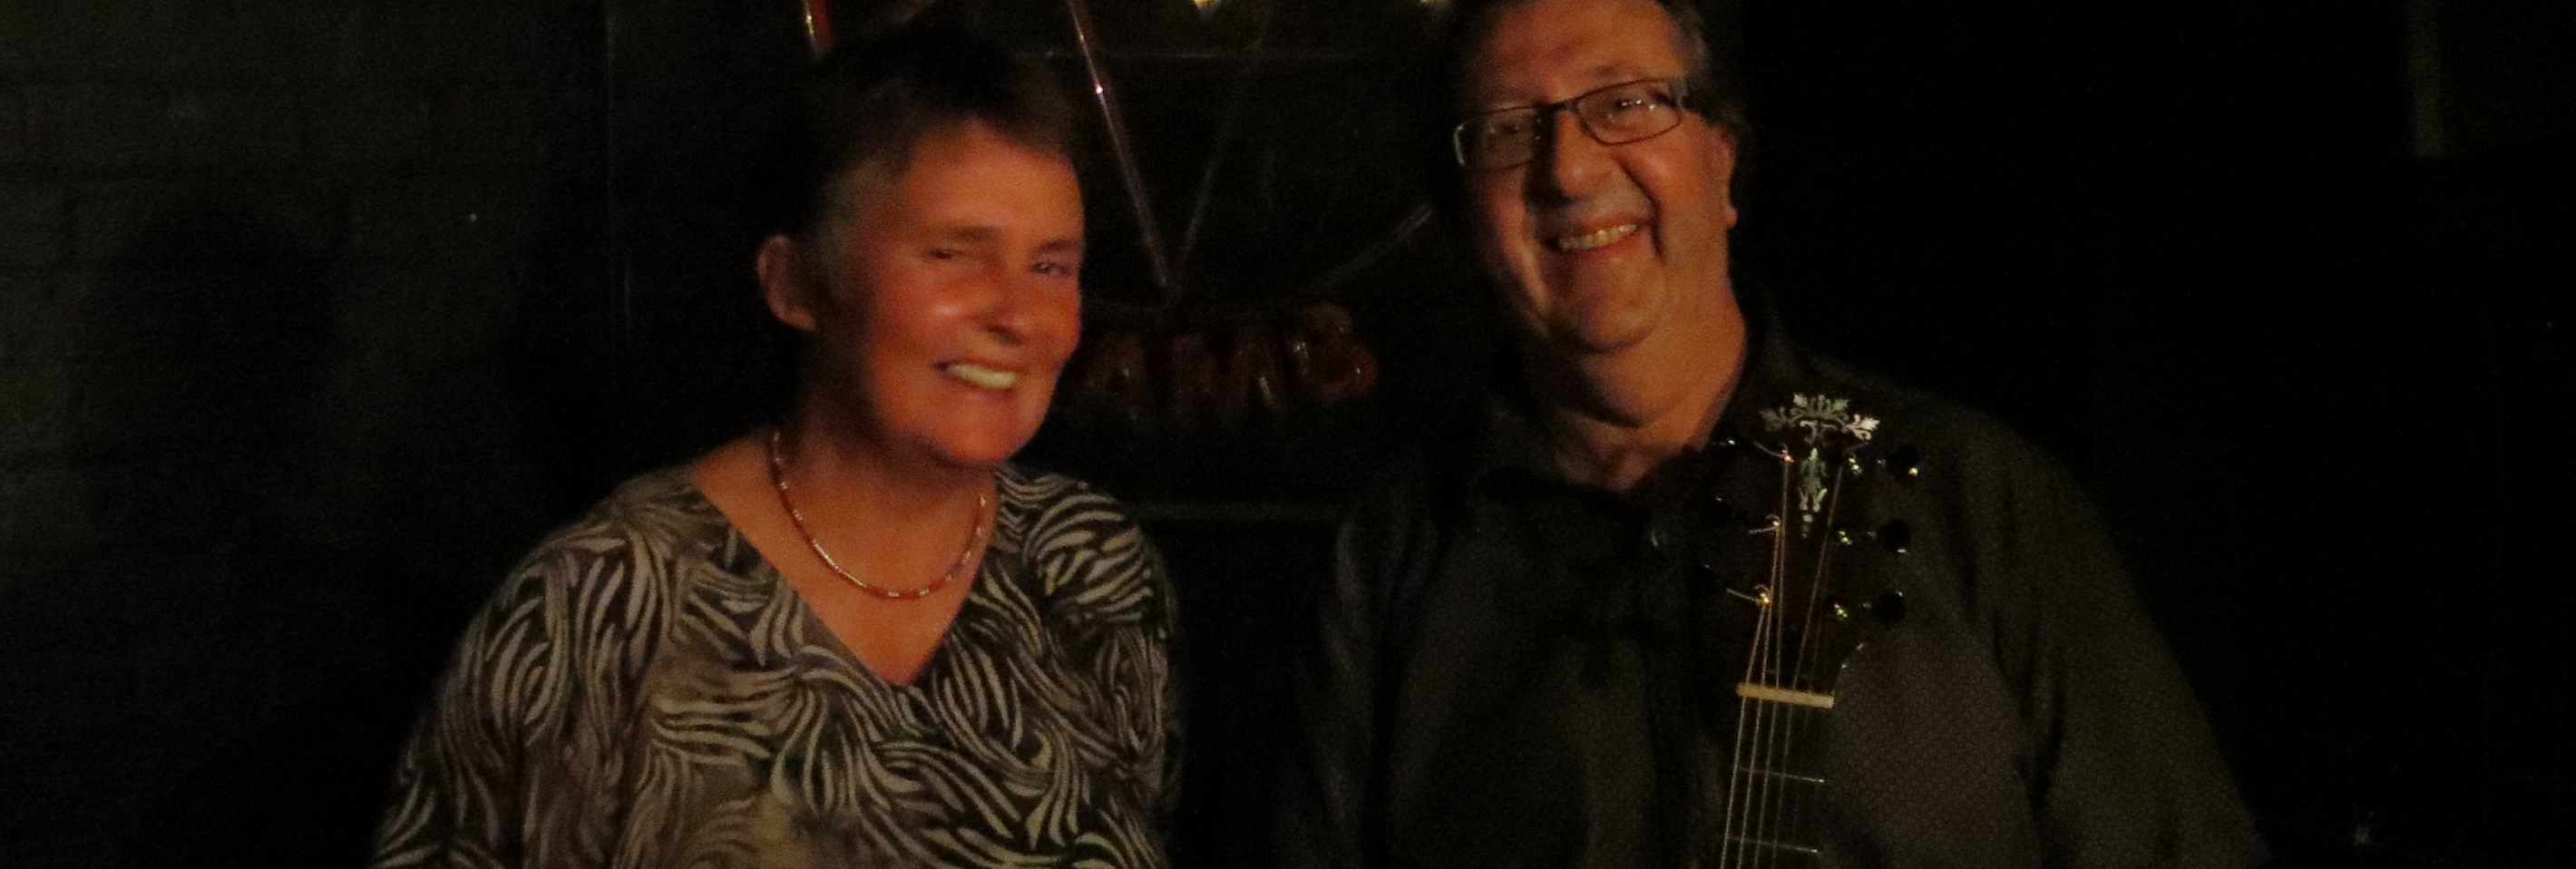 Lynn and Steve dark background blurred